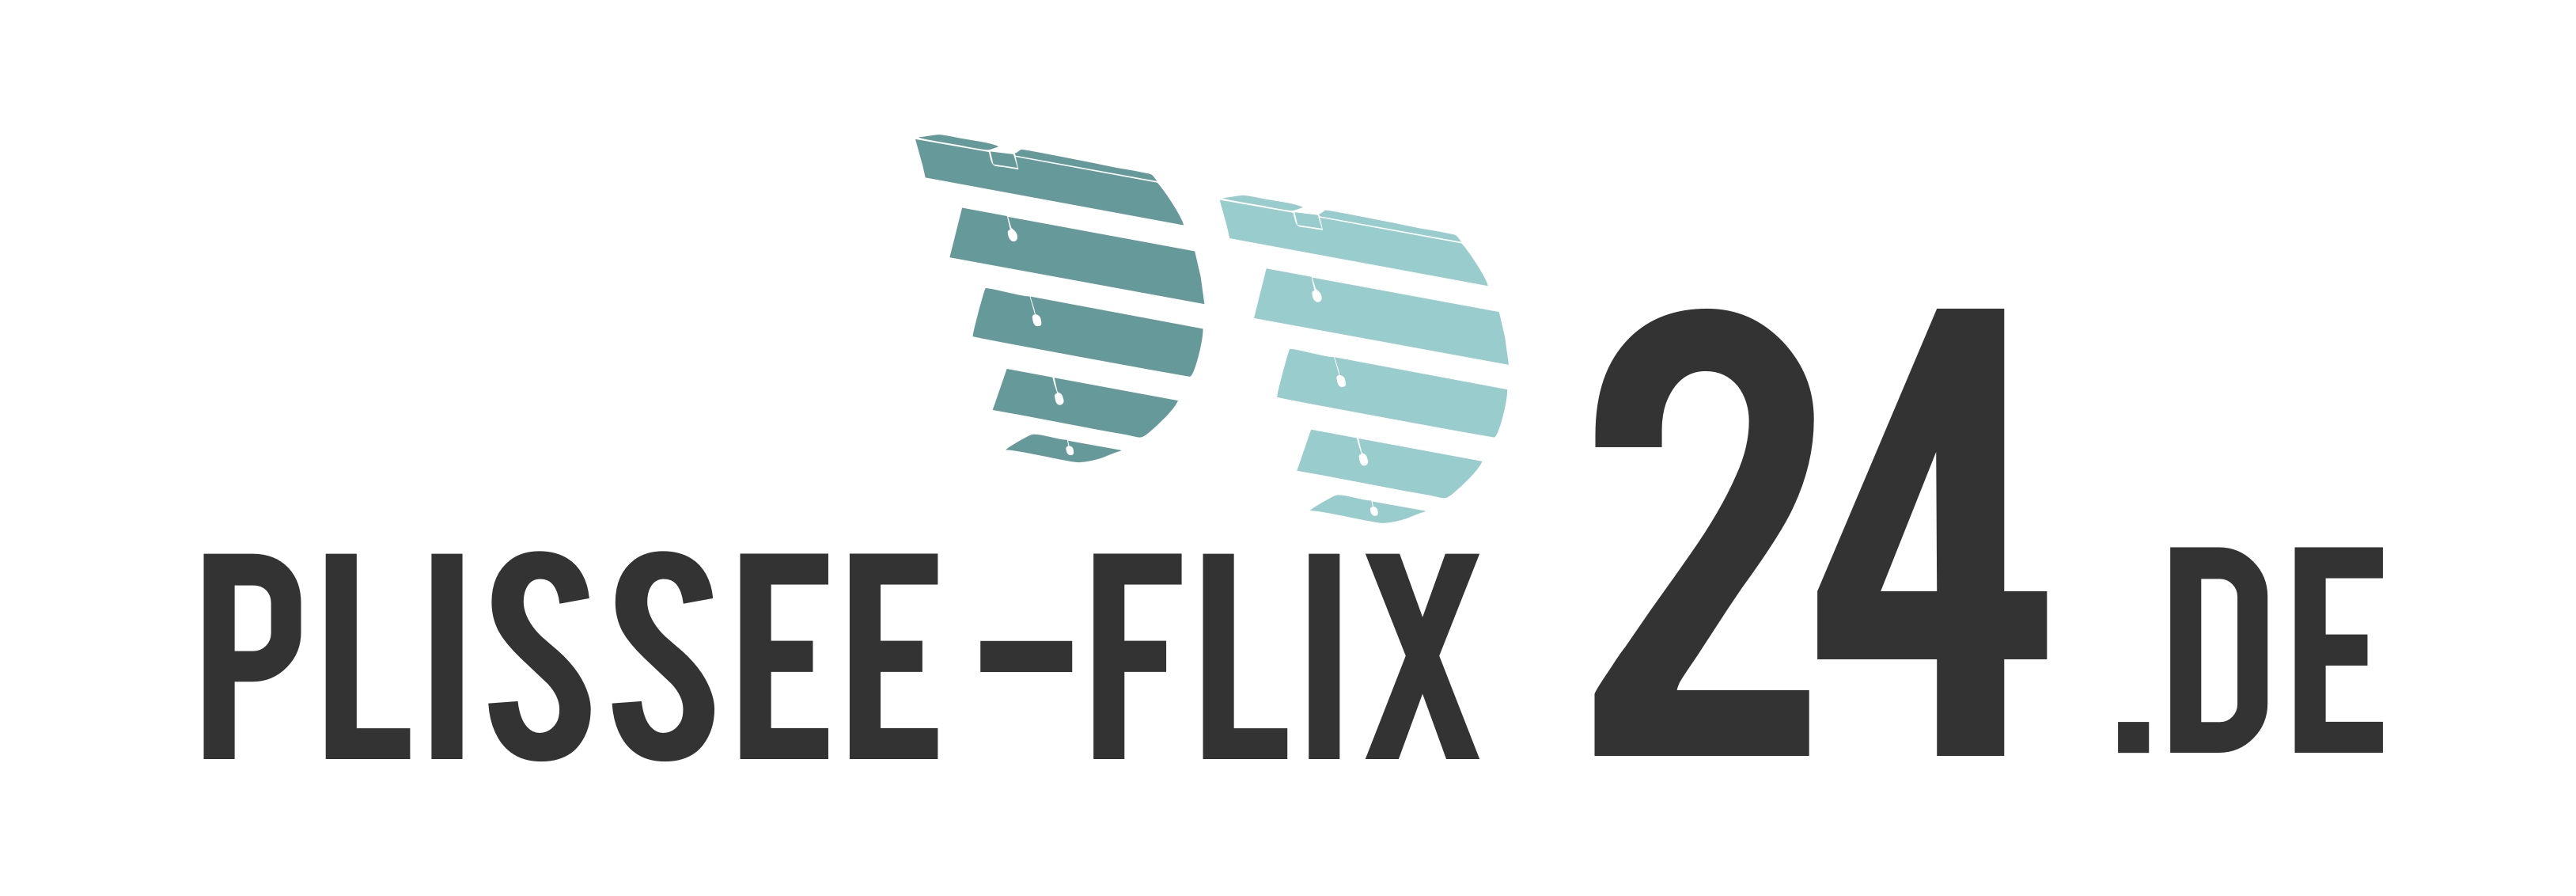 Plissee-Flix24 Partnerprogramm